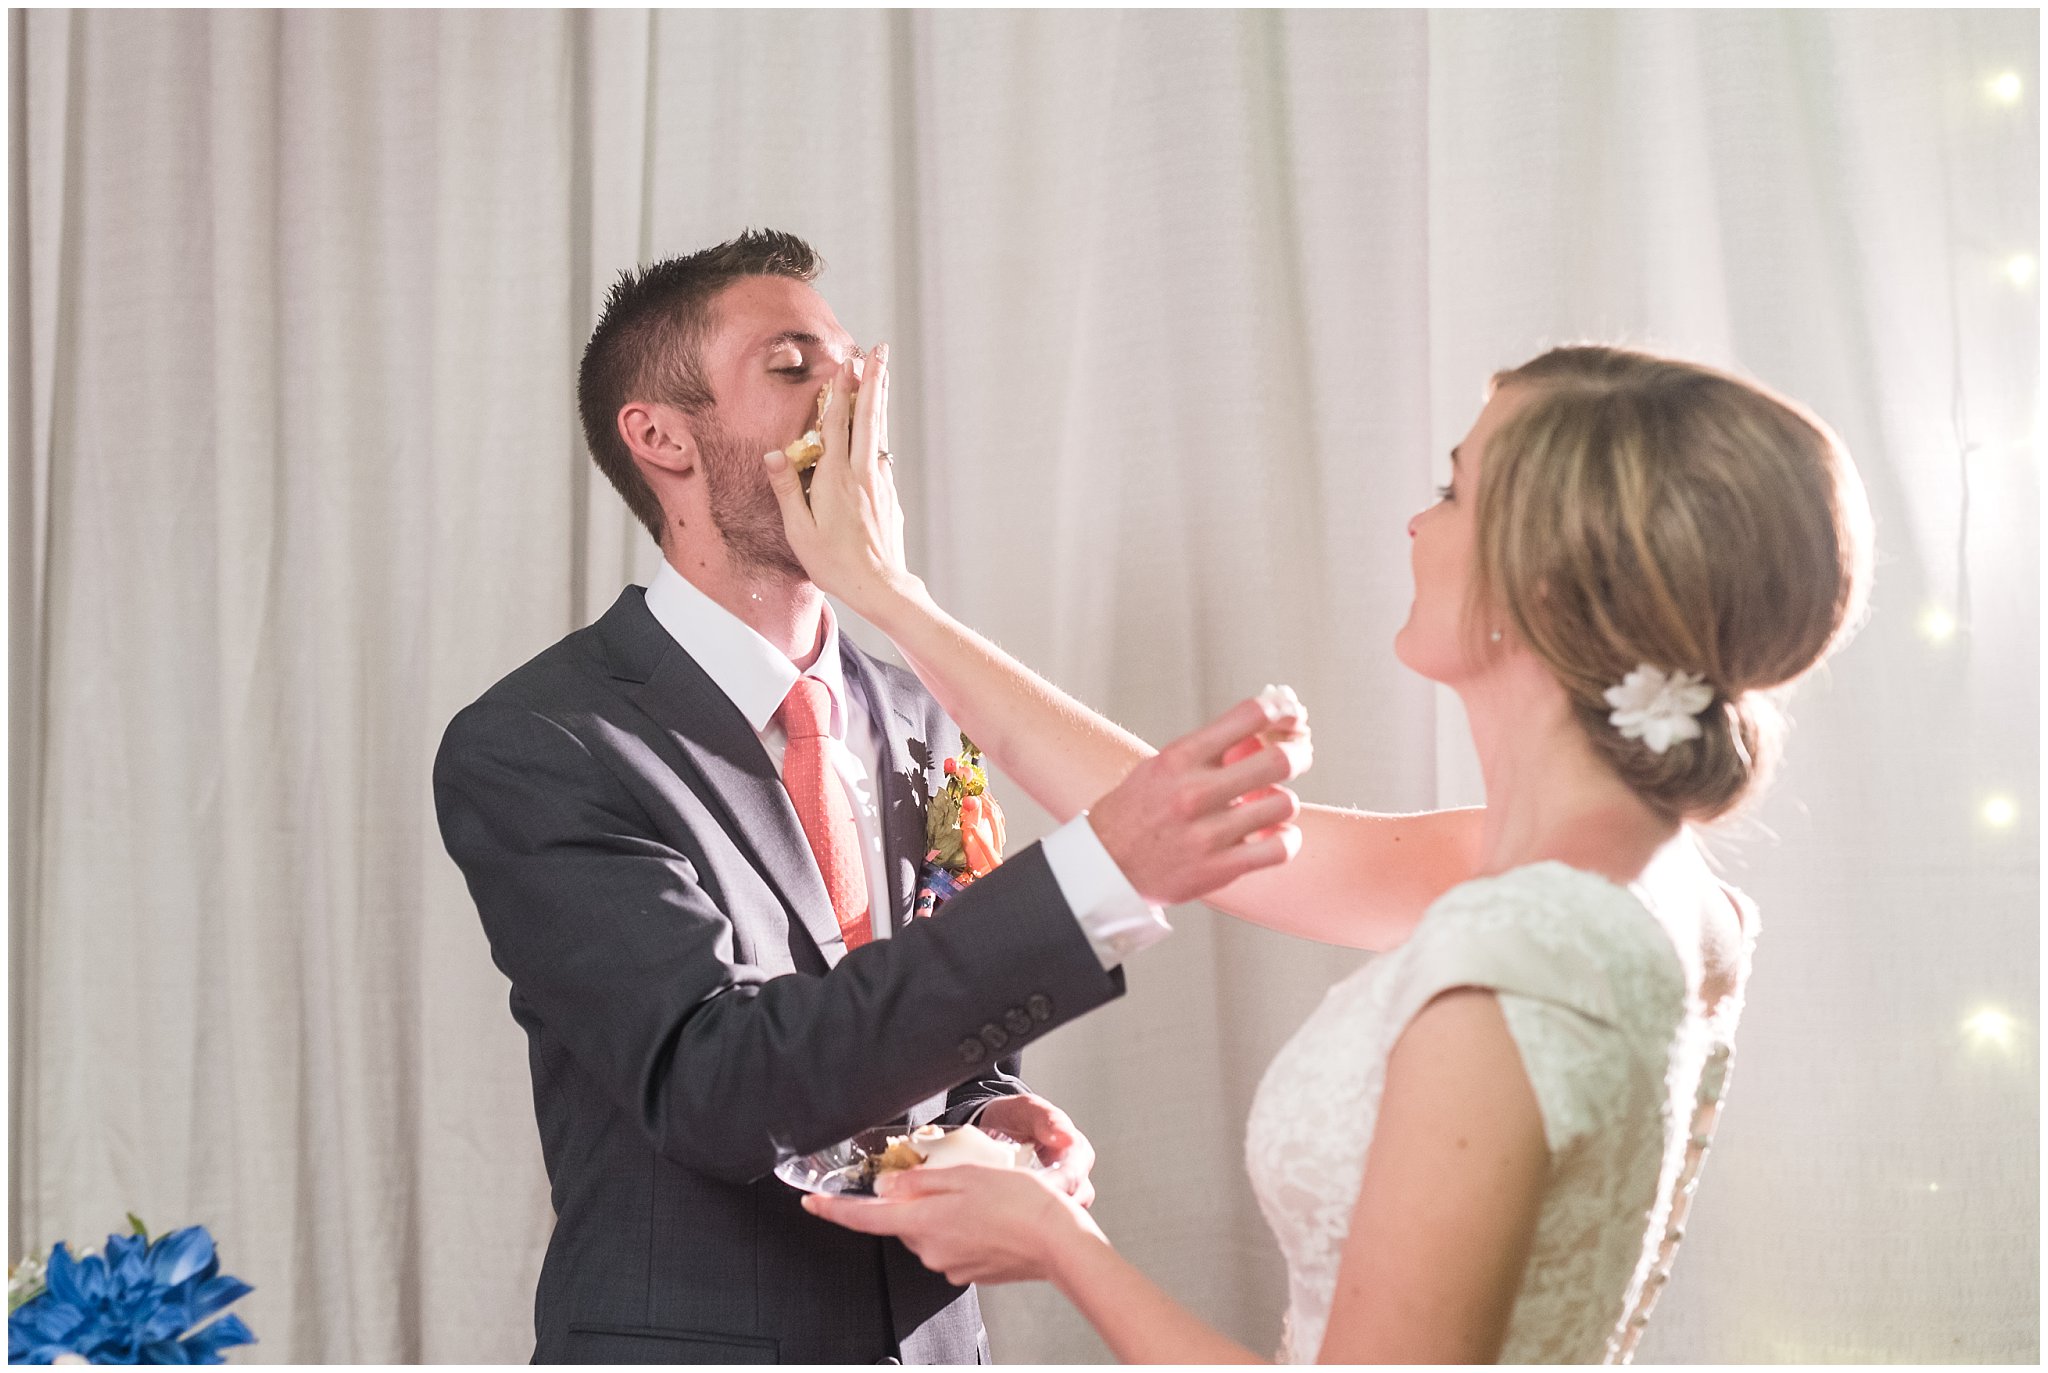 Salt Lake LDS wedding reception | Granite Bakery | Cake Cutting | Coral and grey wedding